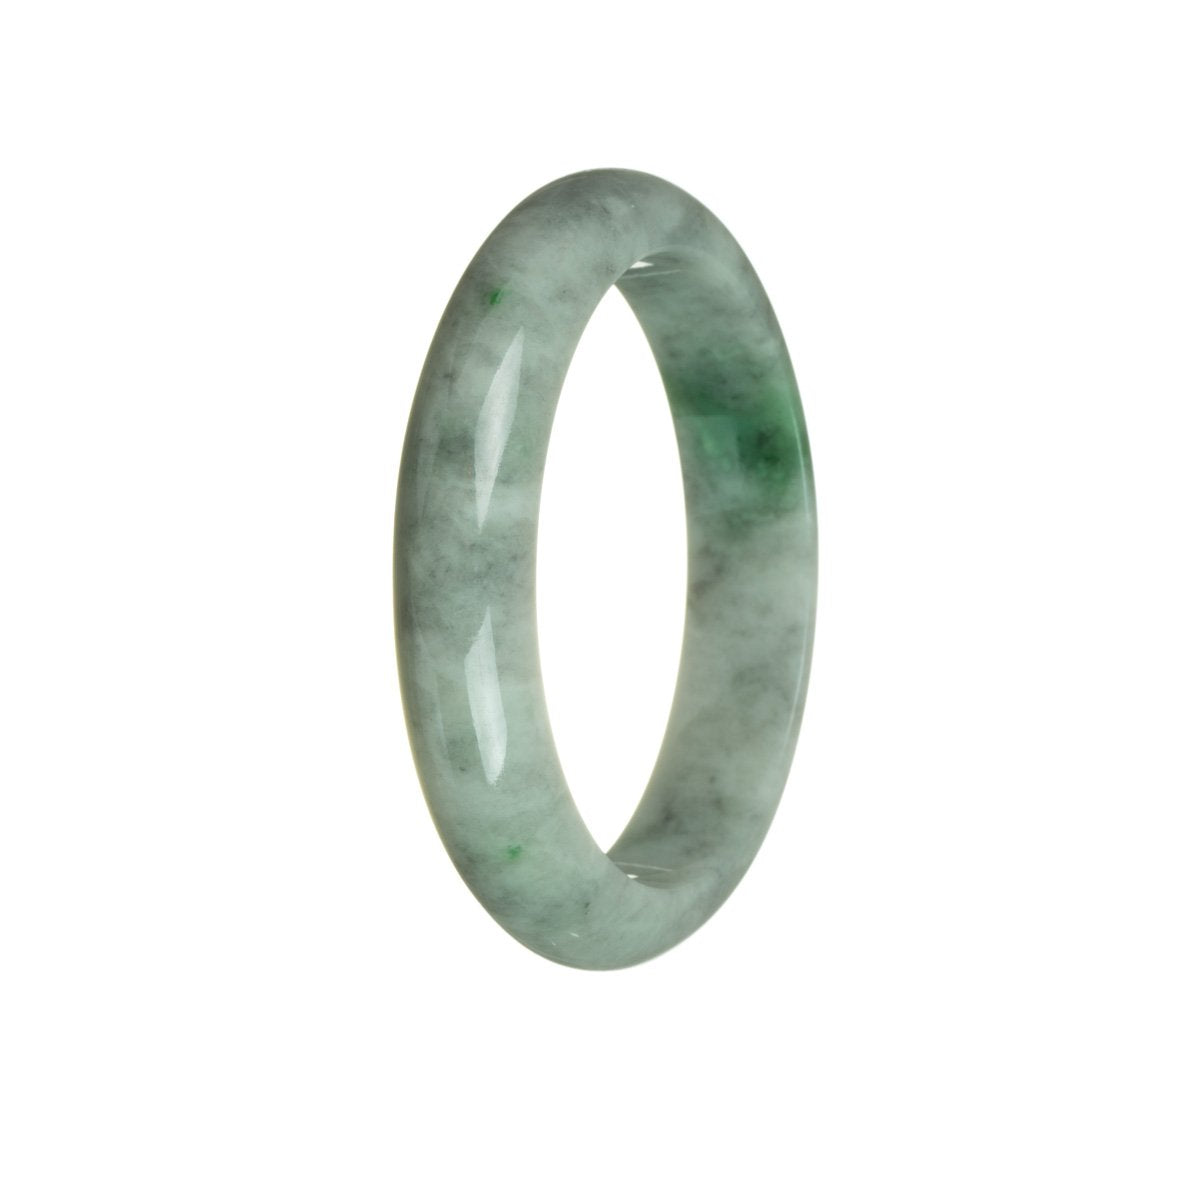 Certified Grade A Bluish Green with Grey Traditional Jade Bangle Bracelet - 58mm Half Moon